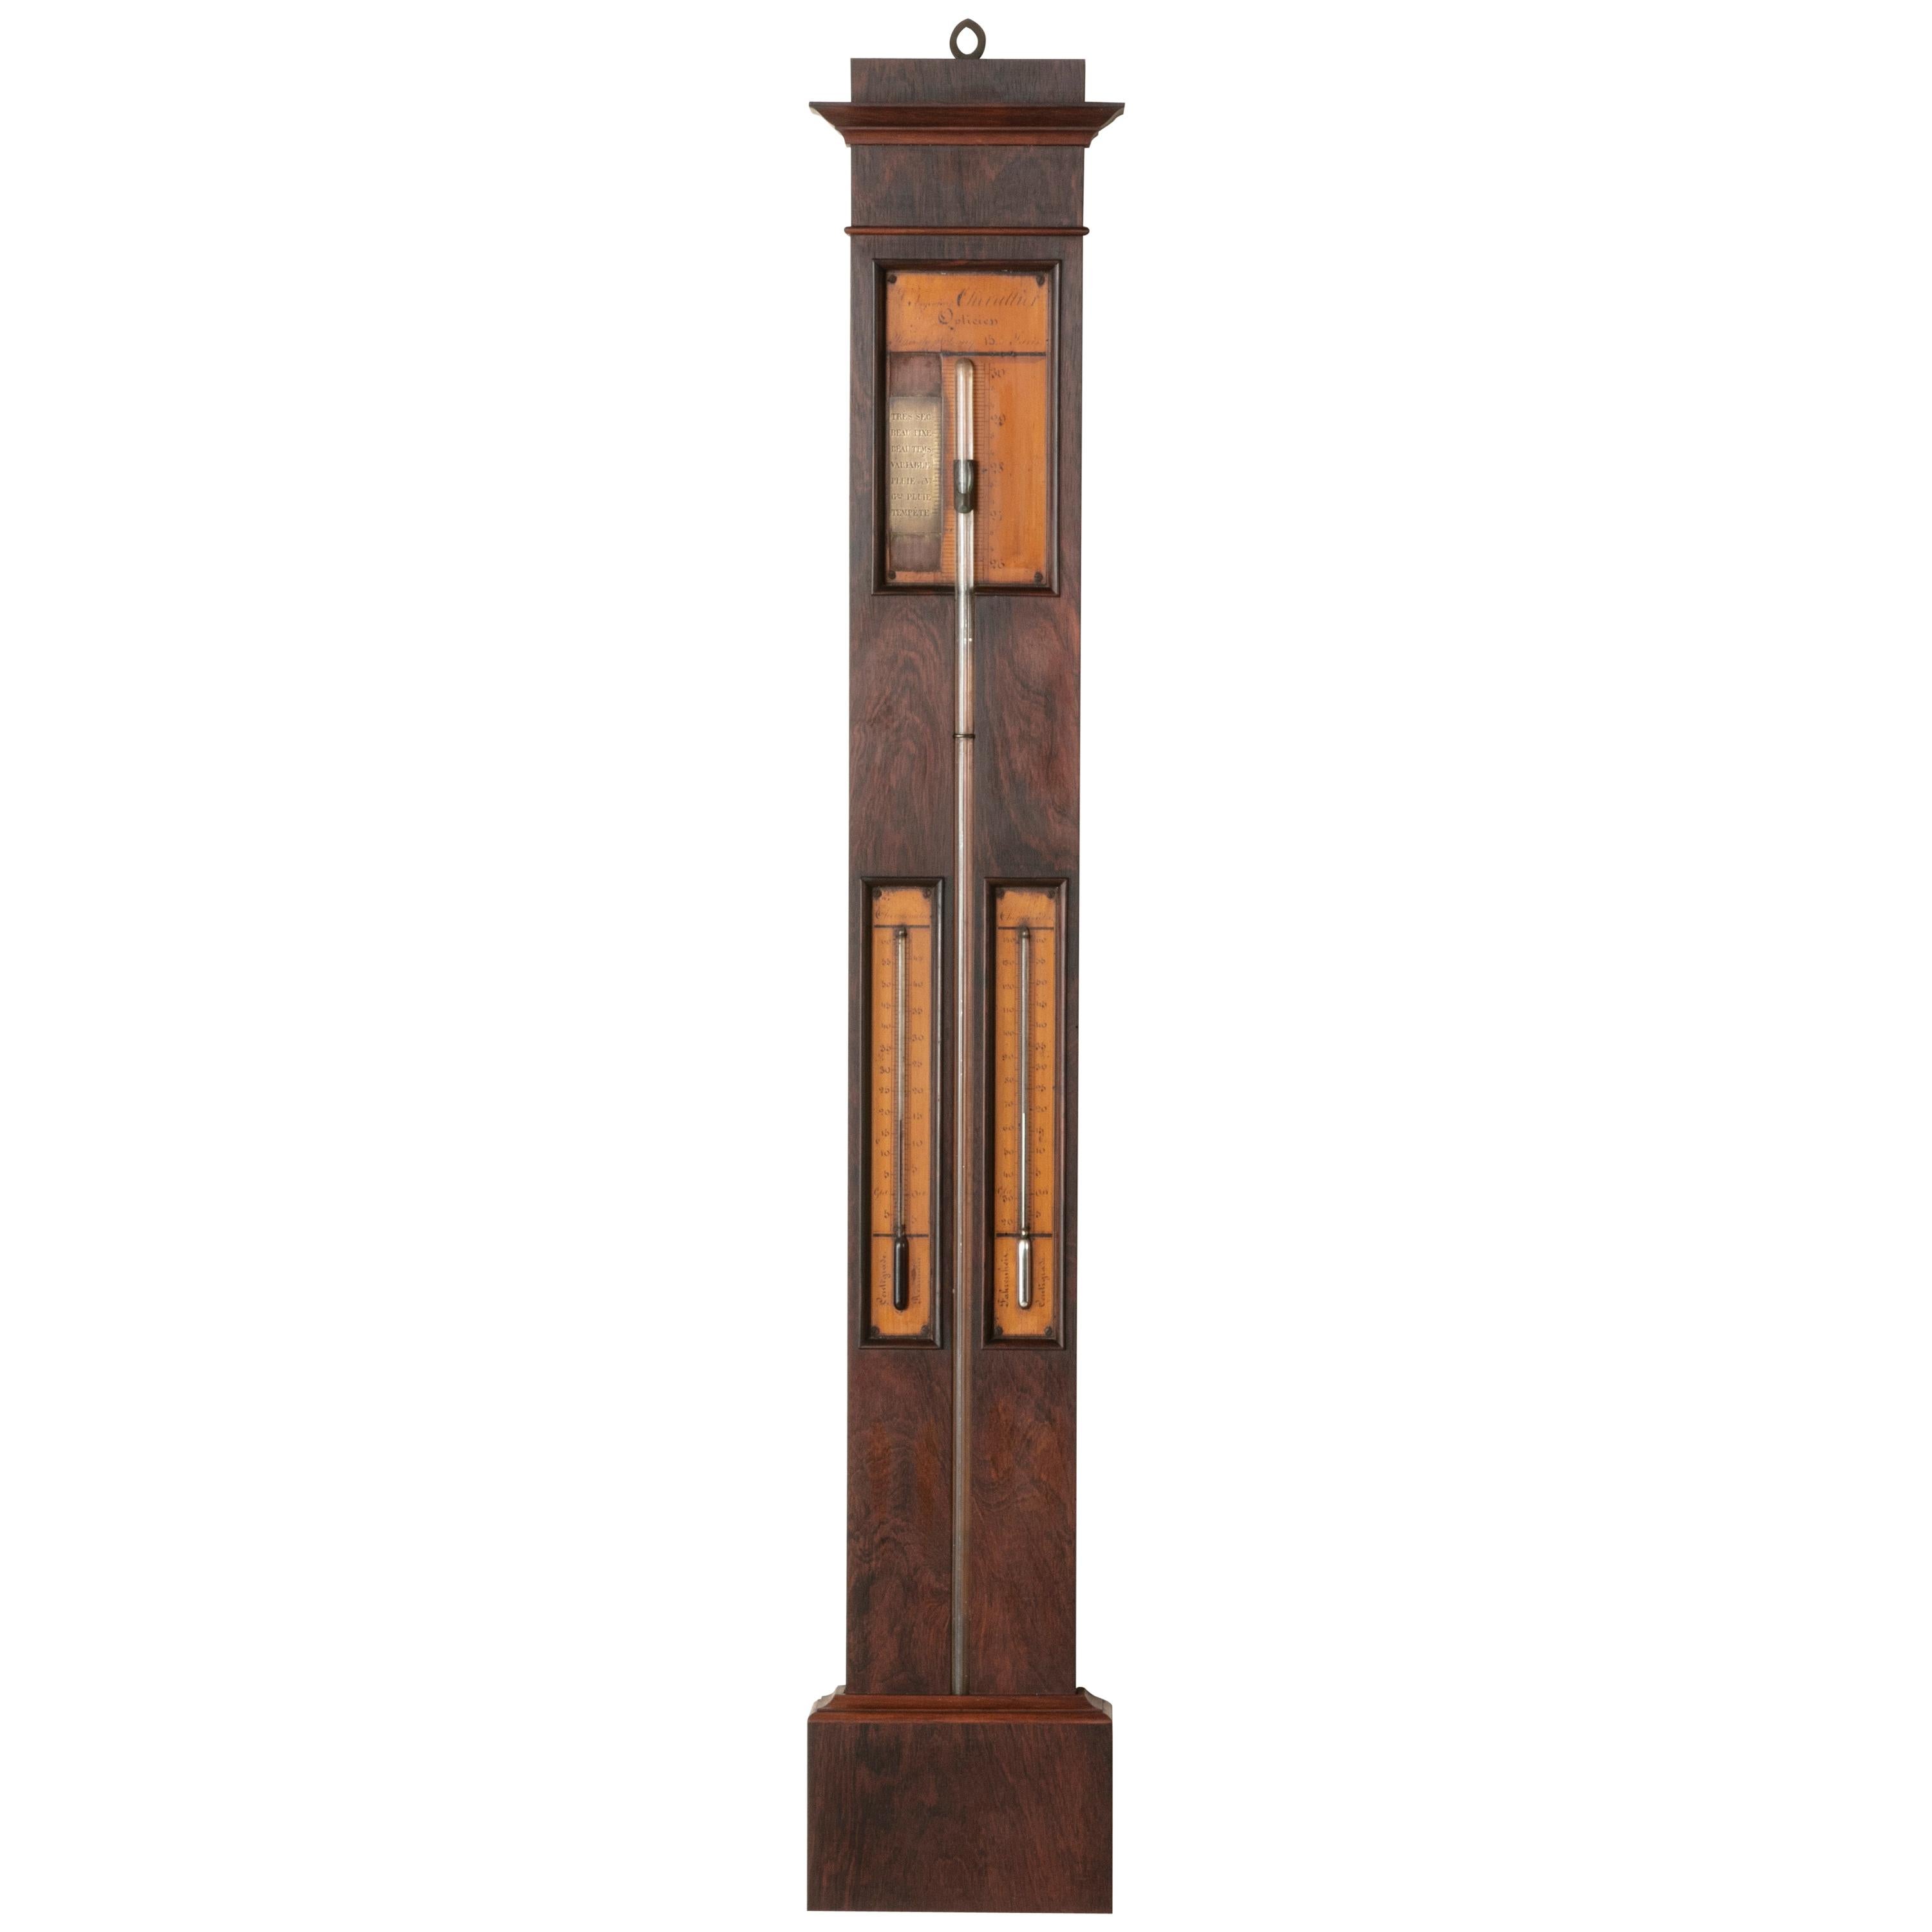 19th Century French Mahogany and Lemon Wood Barometer, Signed Chevallier